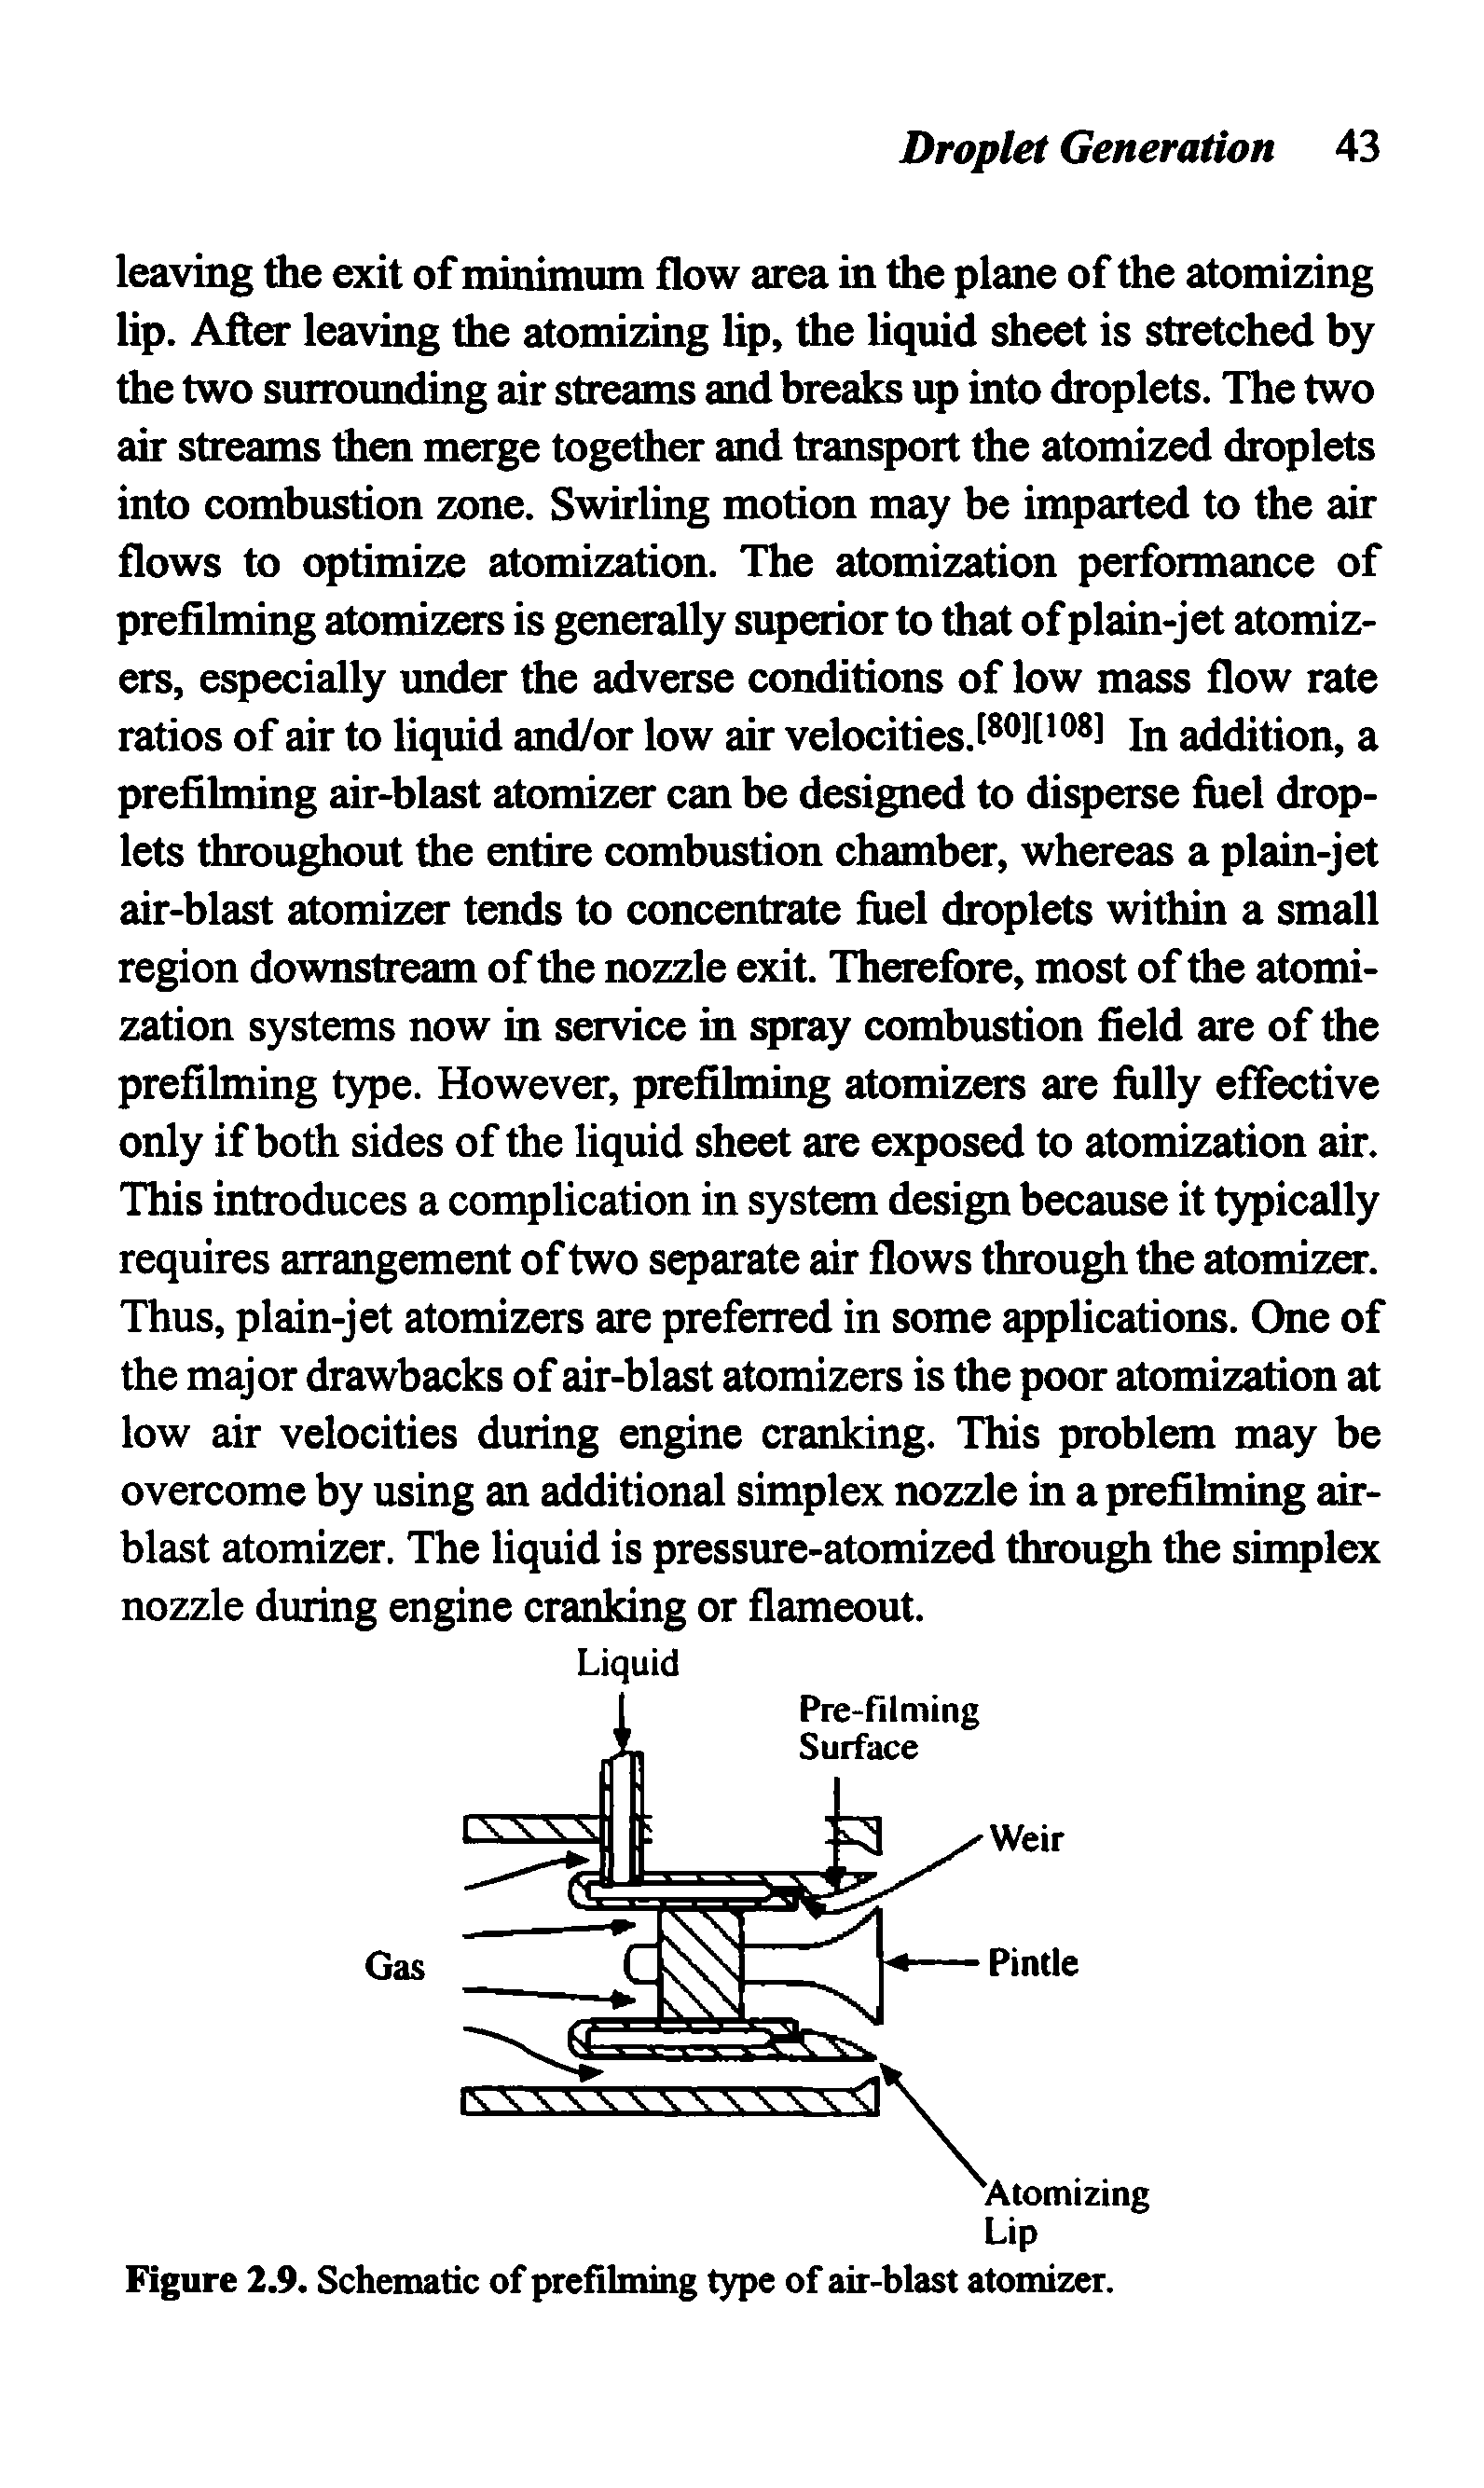 Figure 2.9. Schematic of prefilming type of air-blast atomizer.